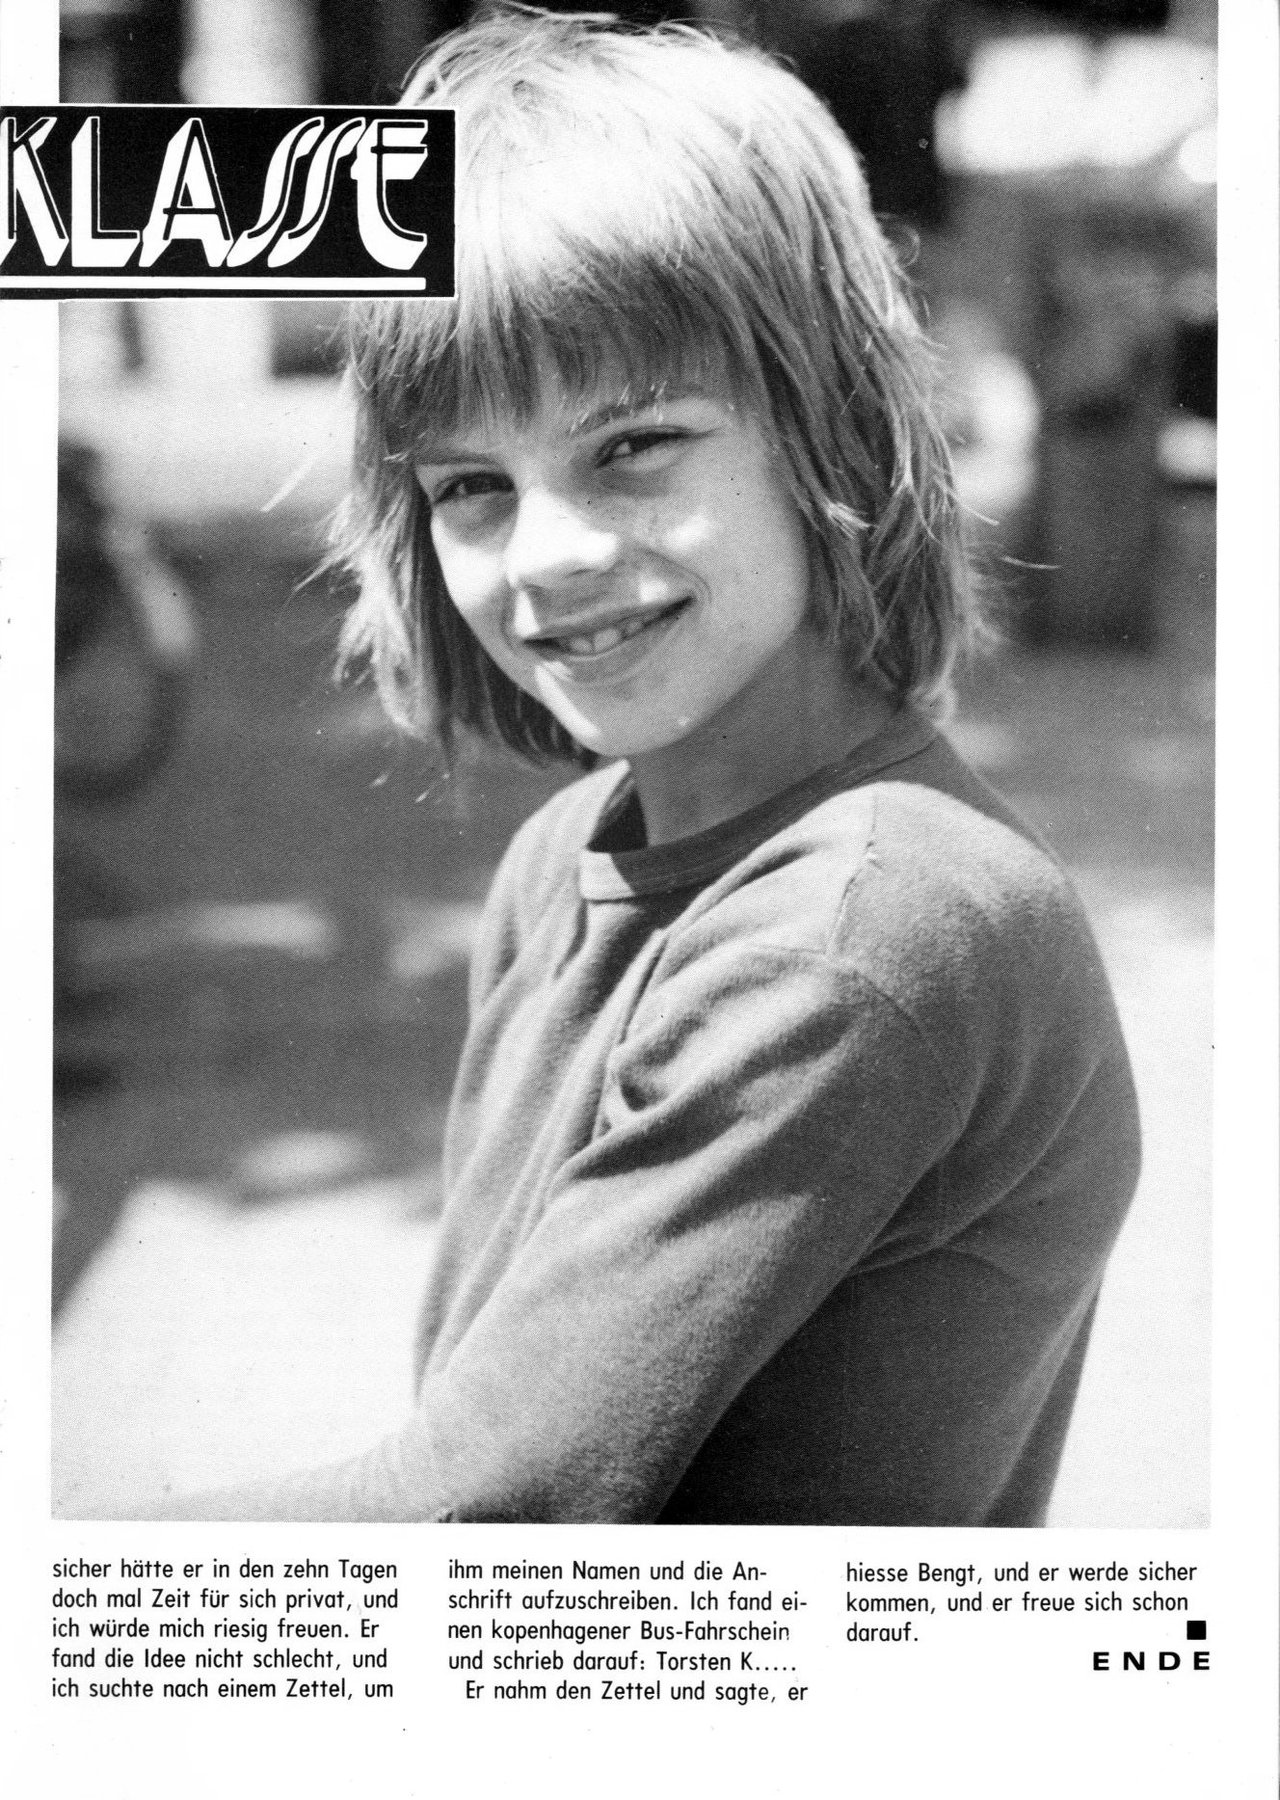 Magazine Boy Denmark 1970s 1980s A Magazine That Promoted The